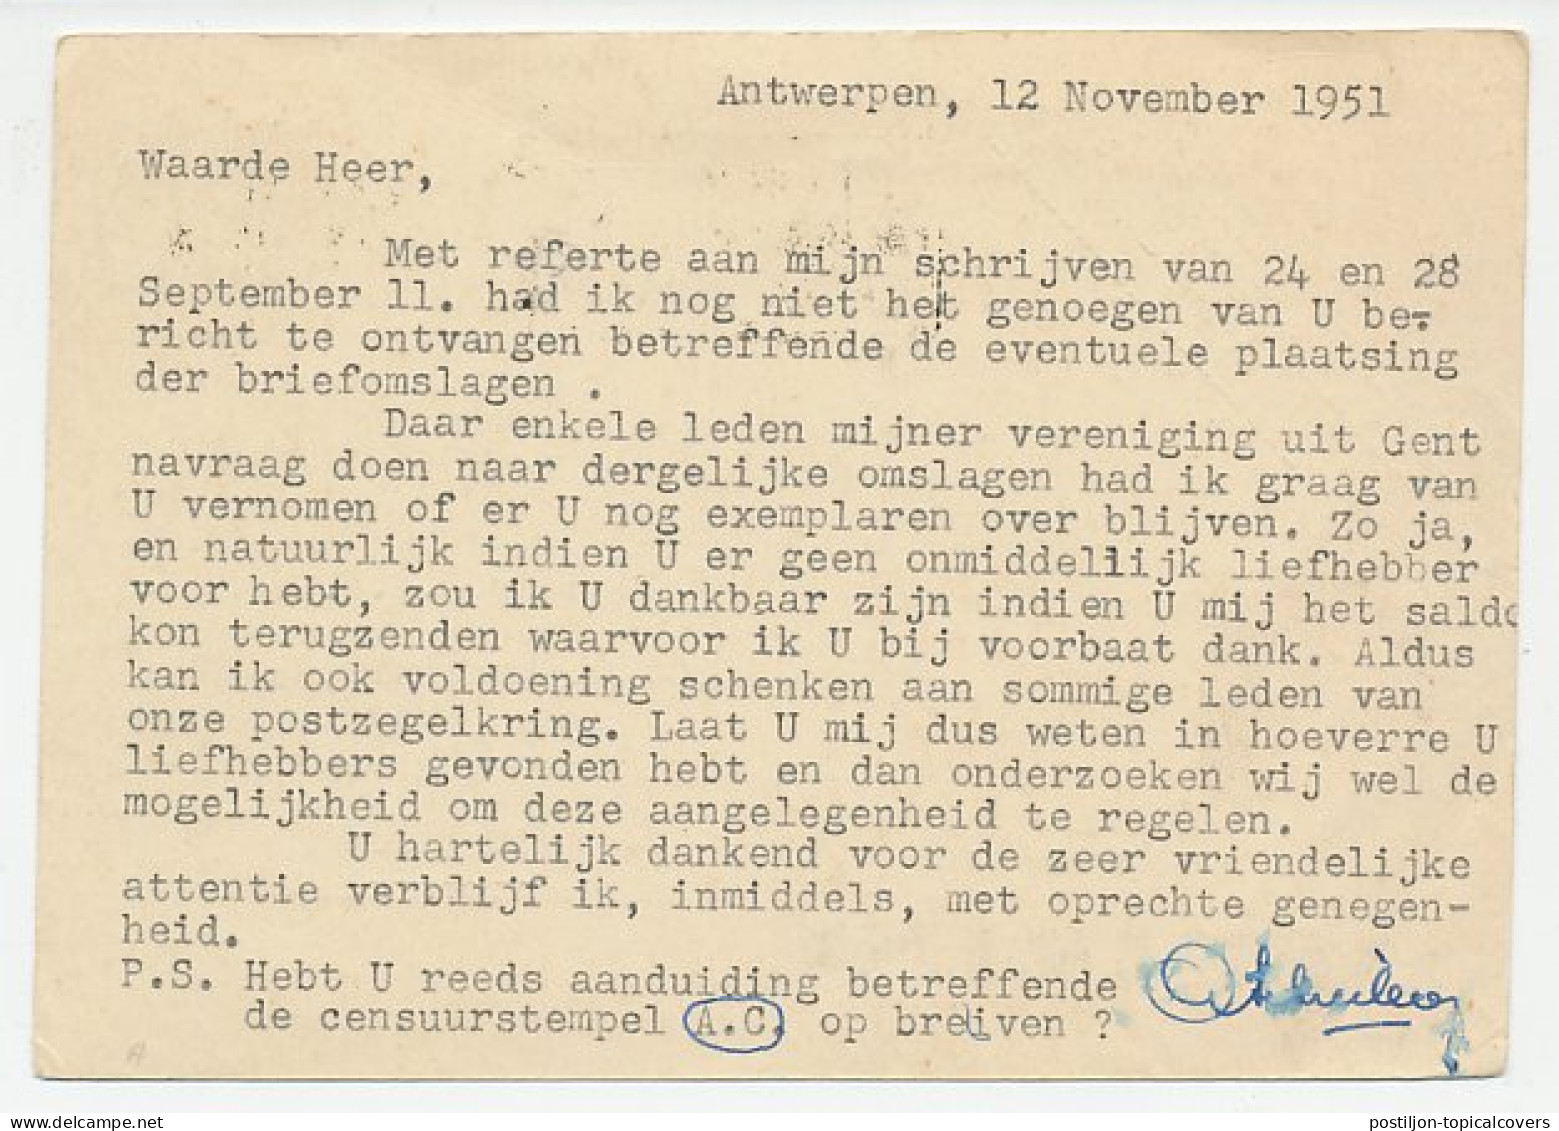 Publibel - Postal Stationery Belgium 1951 Aspirine - Bayer - Pharmacy